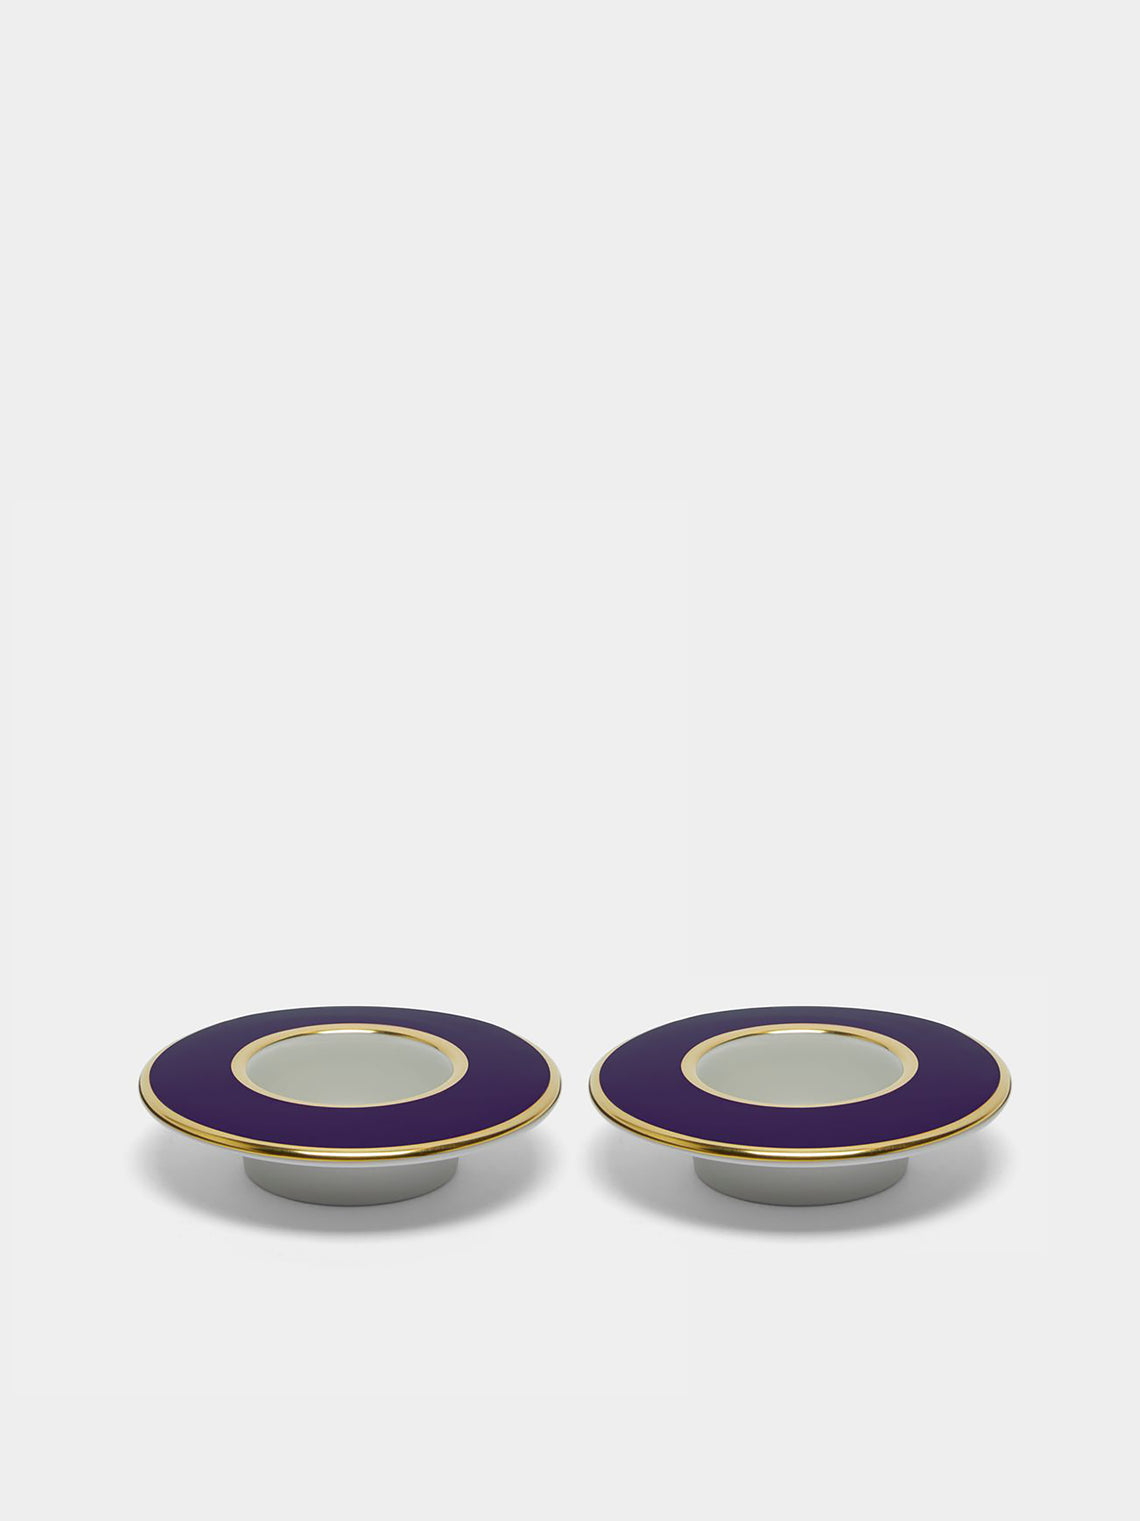 Augarten - Hand-Painted Porcelain Tealight Holders (Set of 2) -  - ABASK